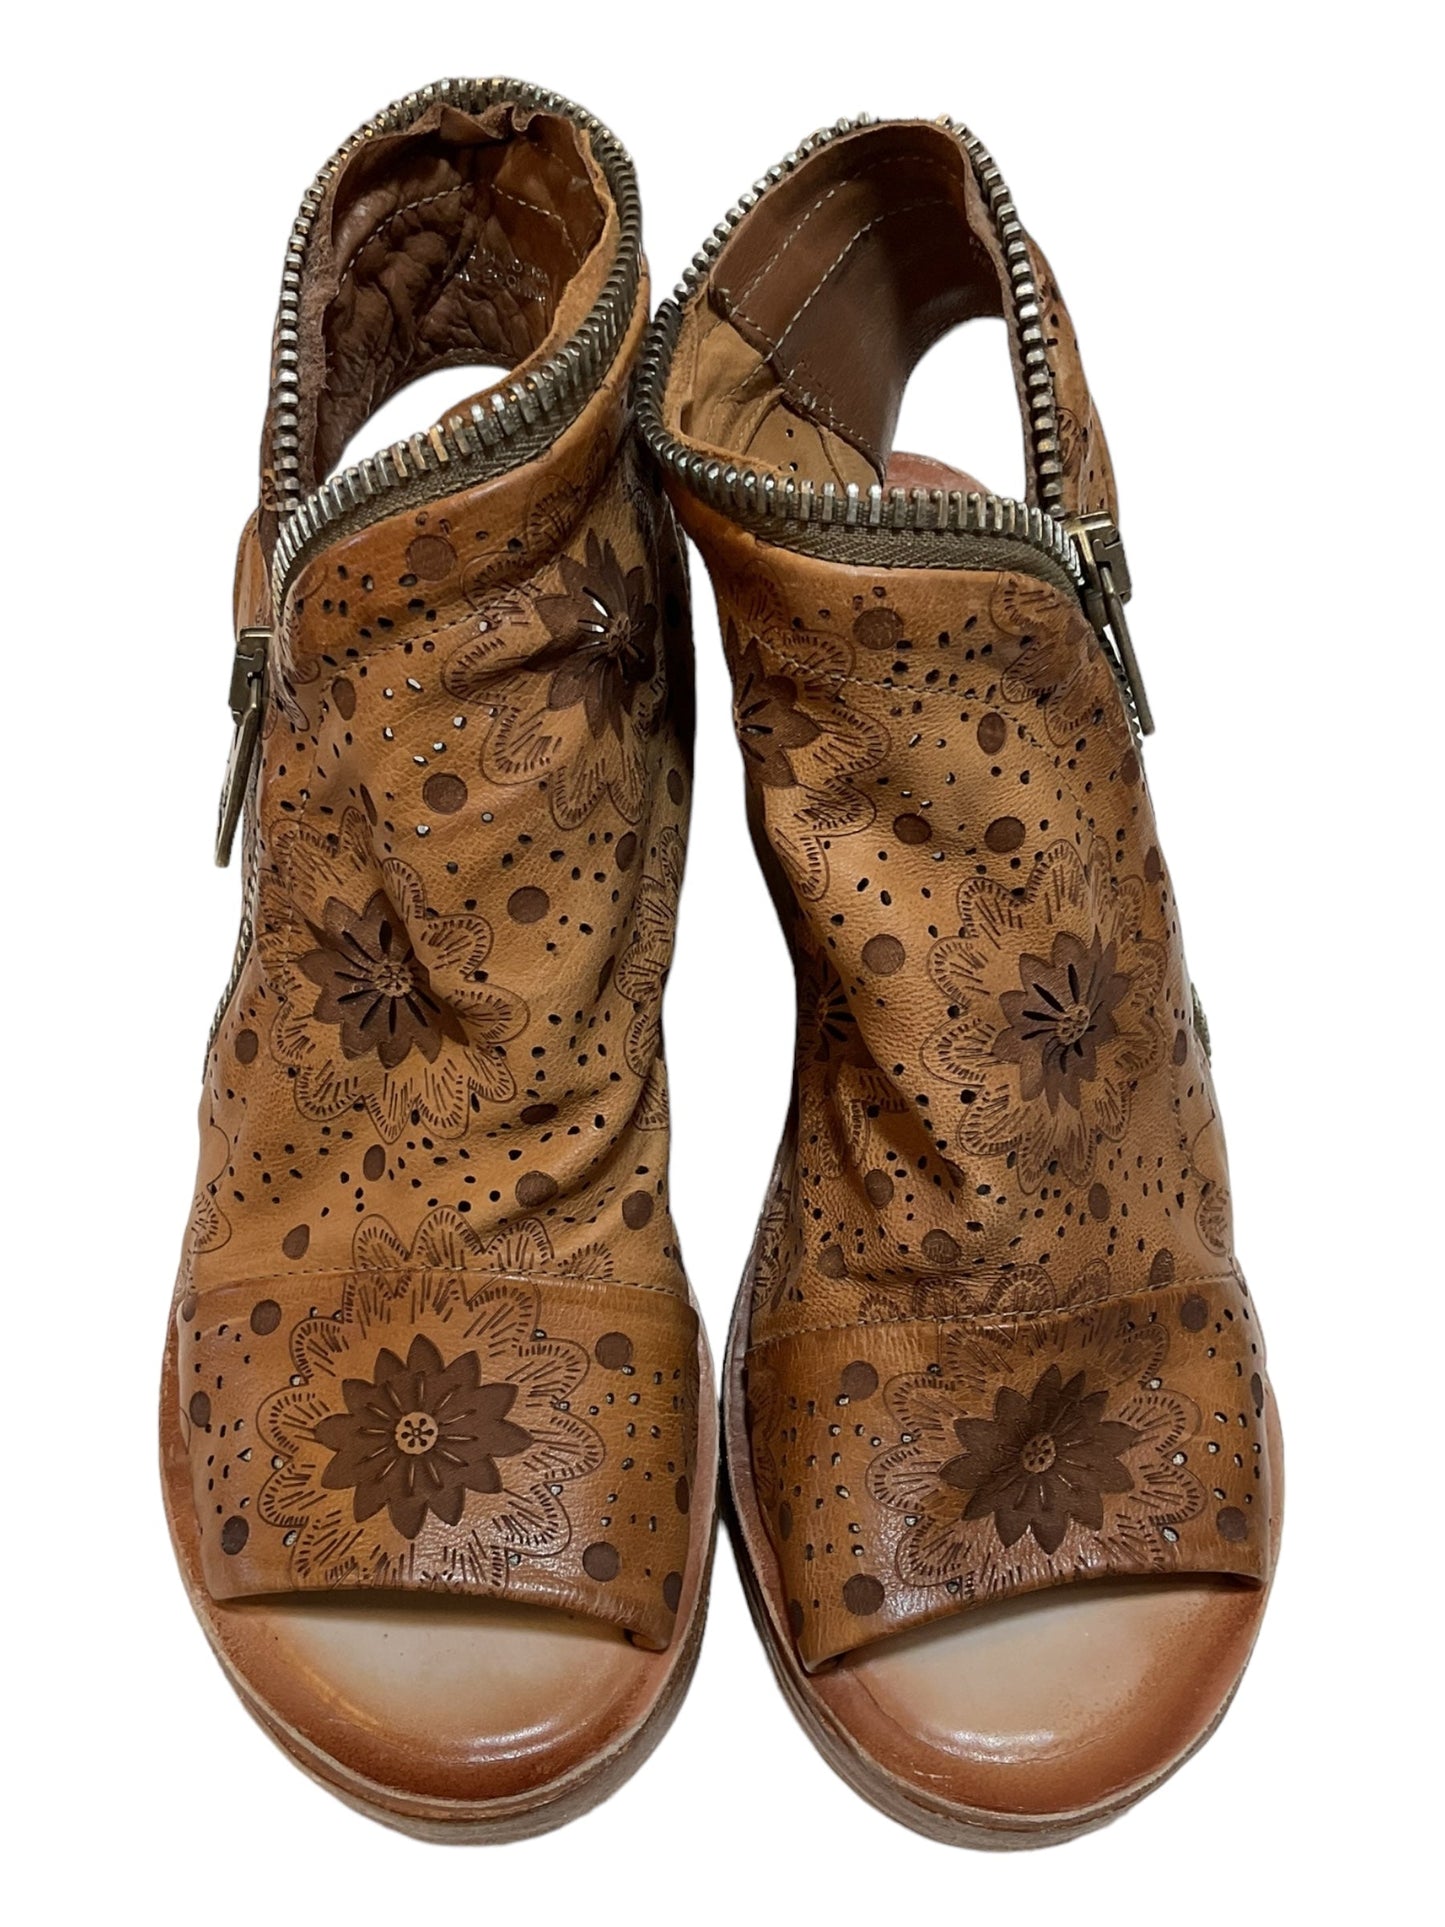 Brown Sandals Heels Wedge Cma, Size 8.5